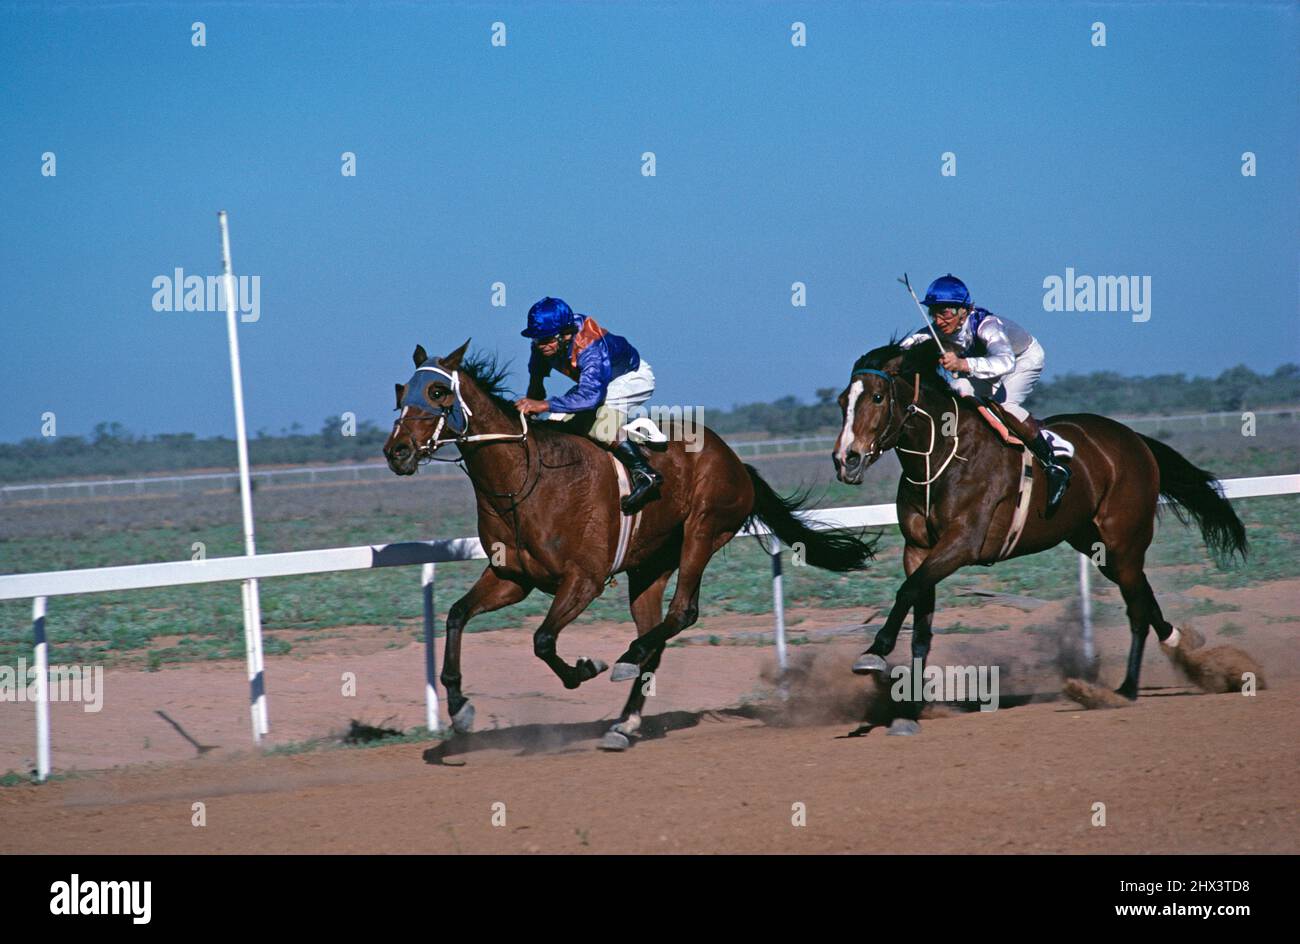 Australia. Queensland. Horse racing on dirt track. Stock Photo